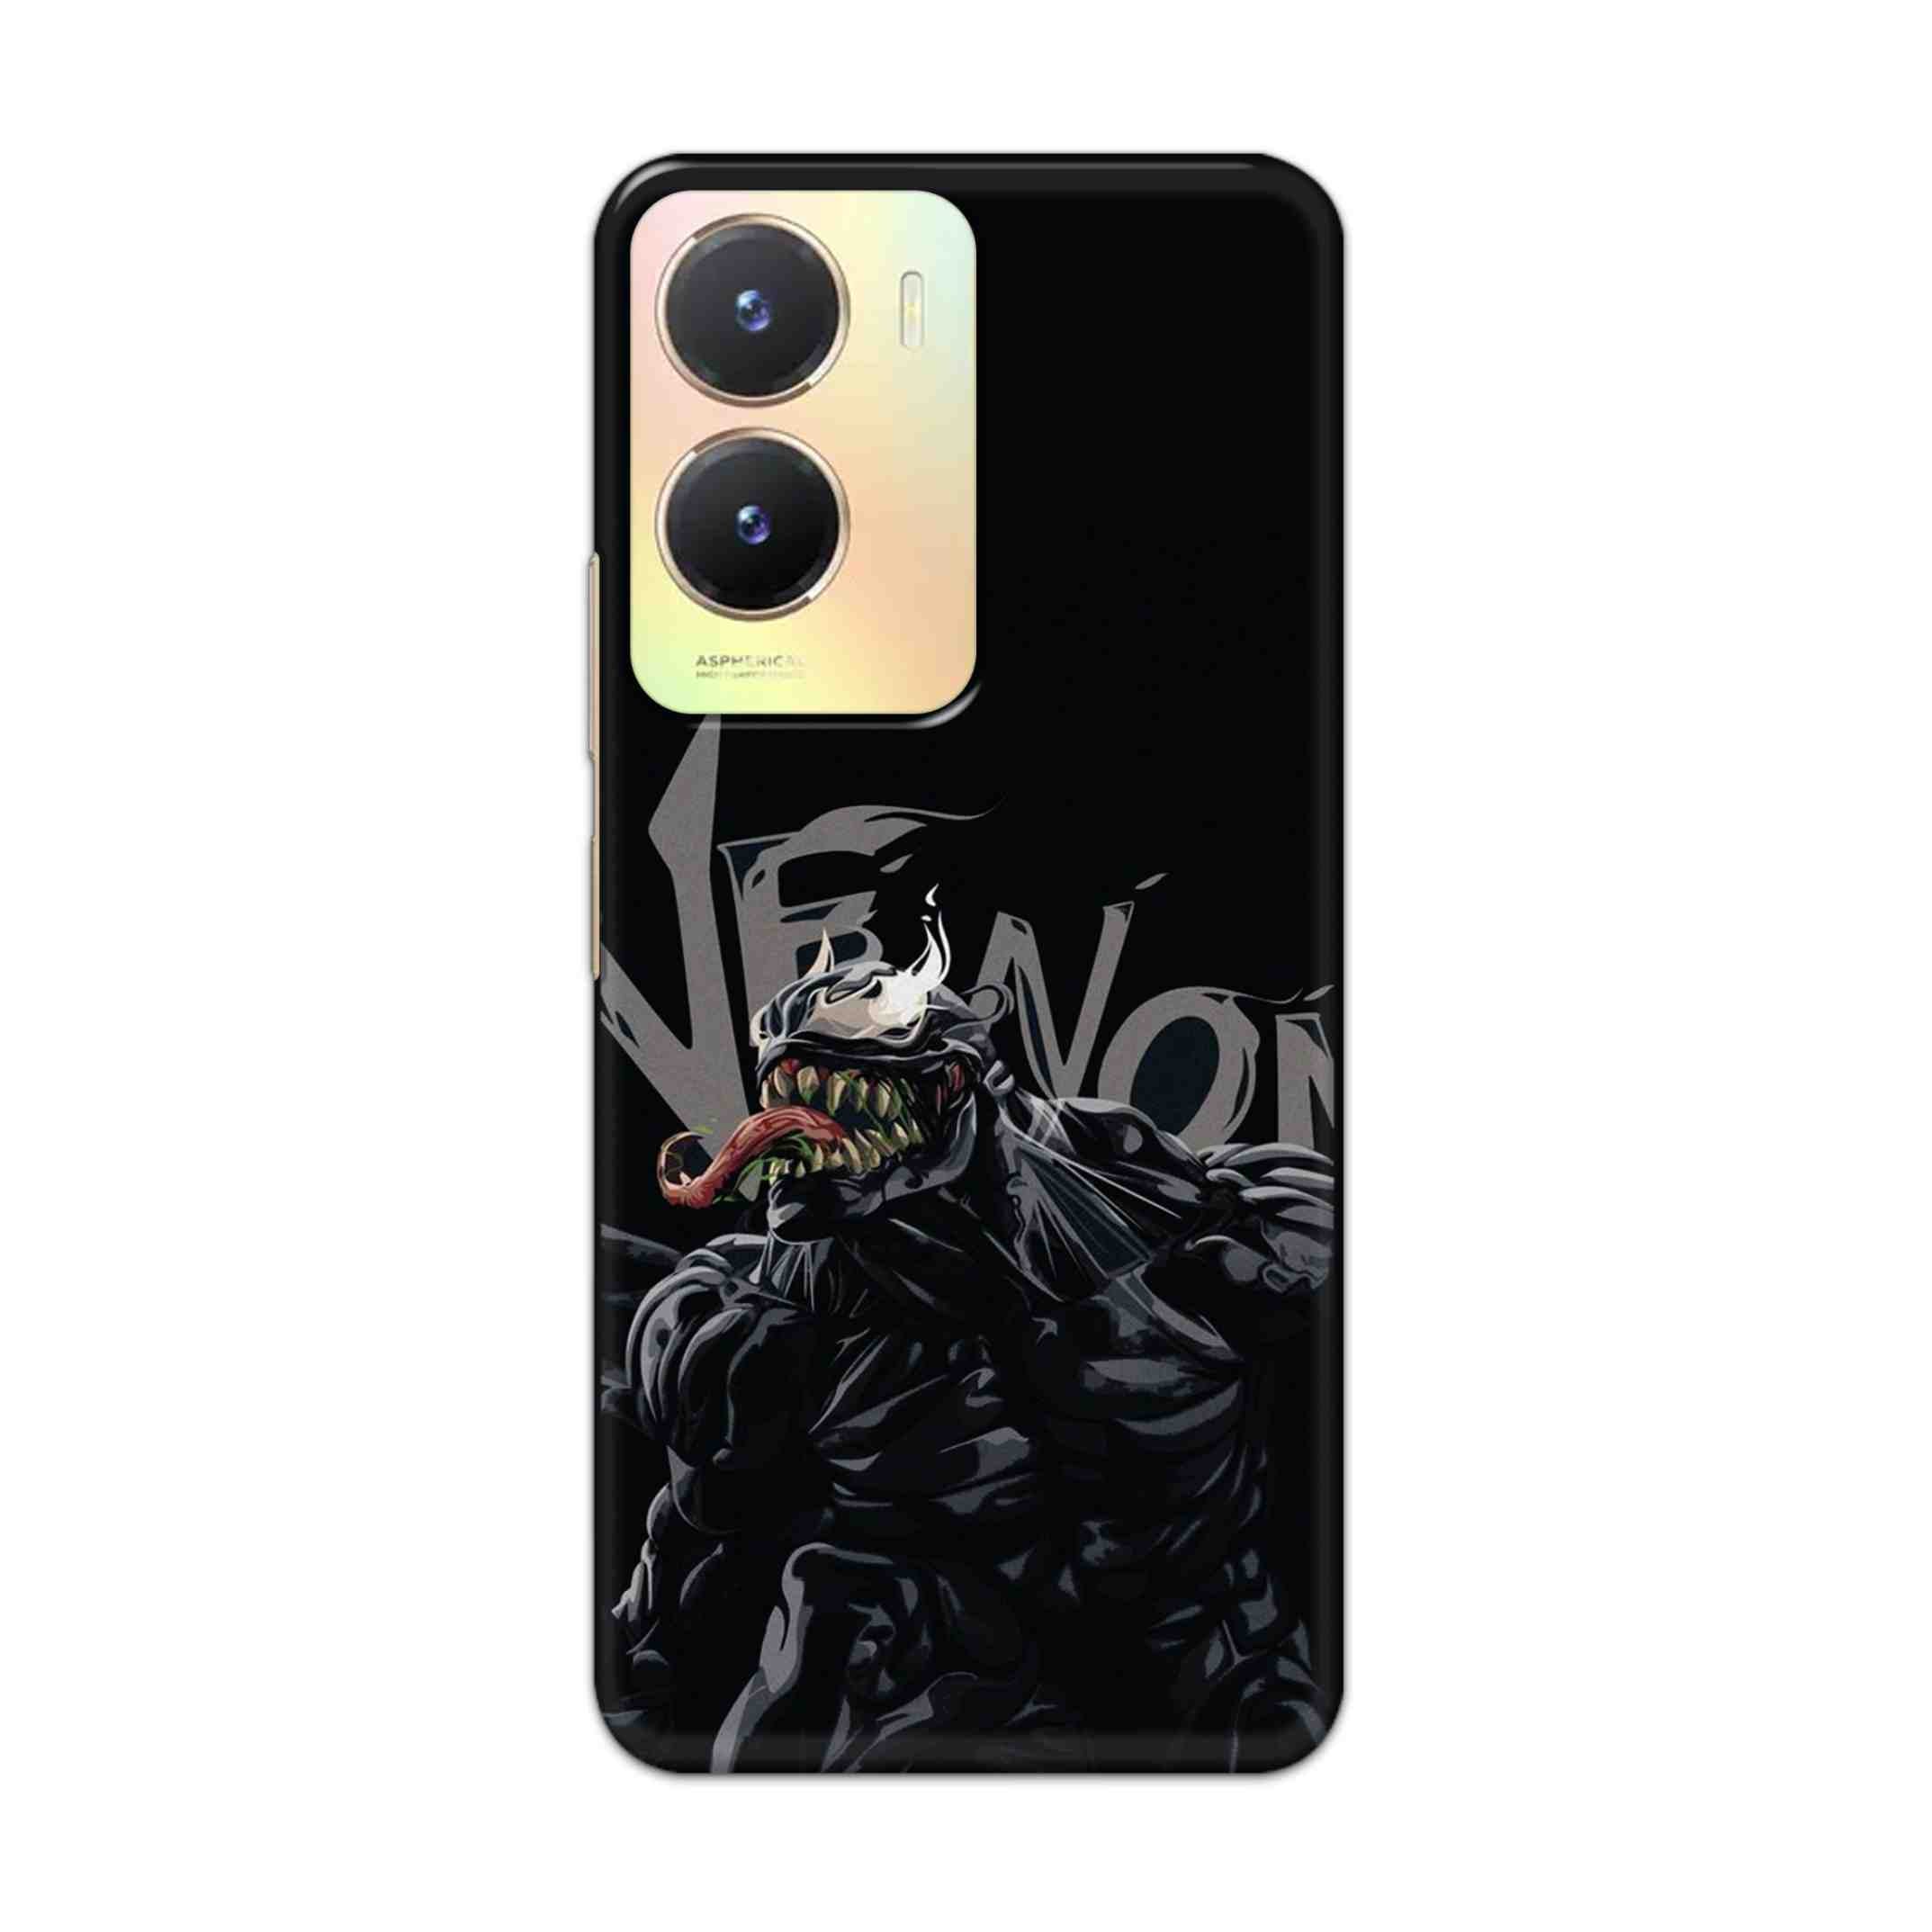 Buy  Venom Hard Back Mobile Phone Case Cover For Vivo T2x Online